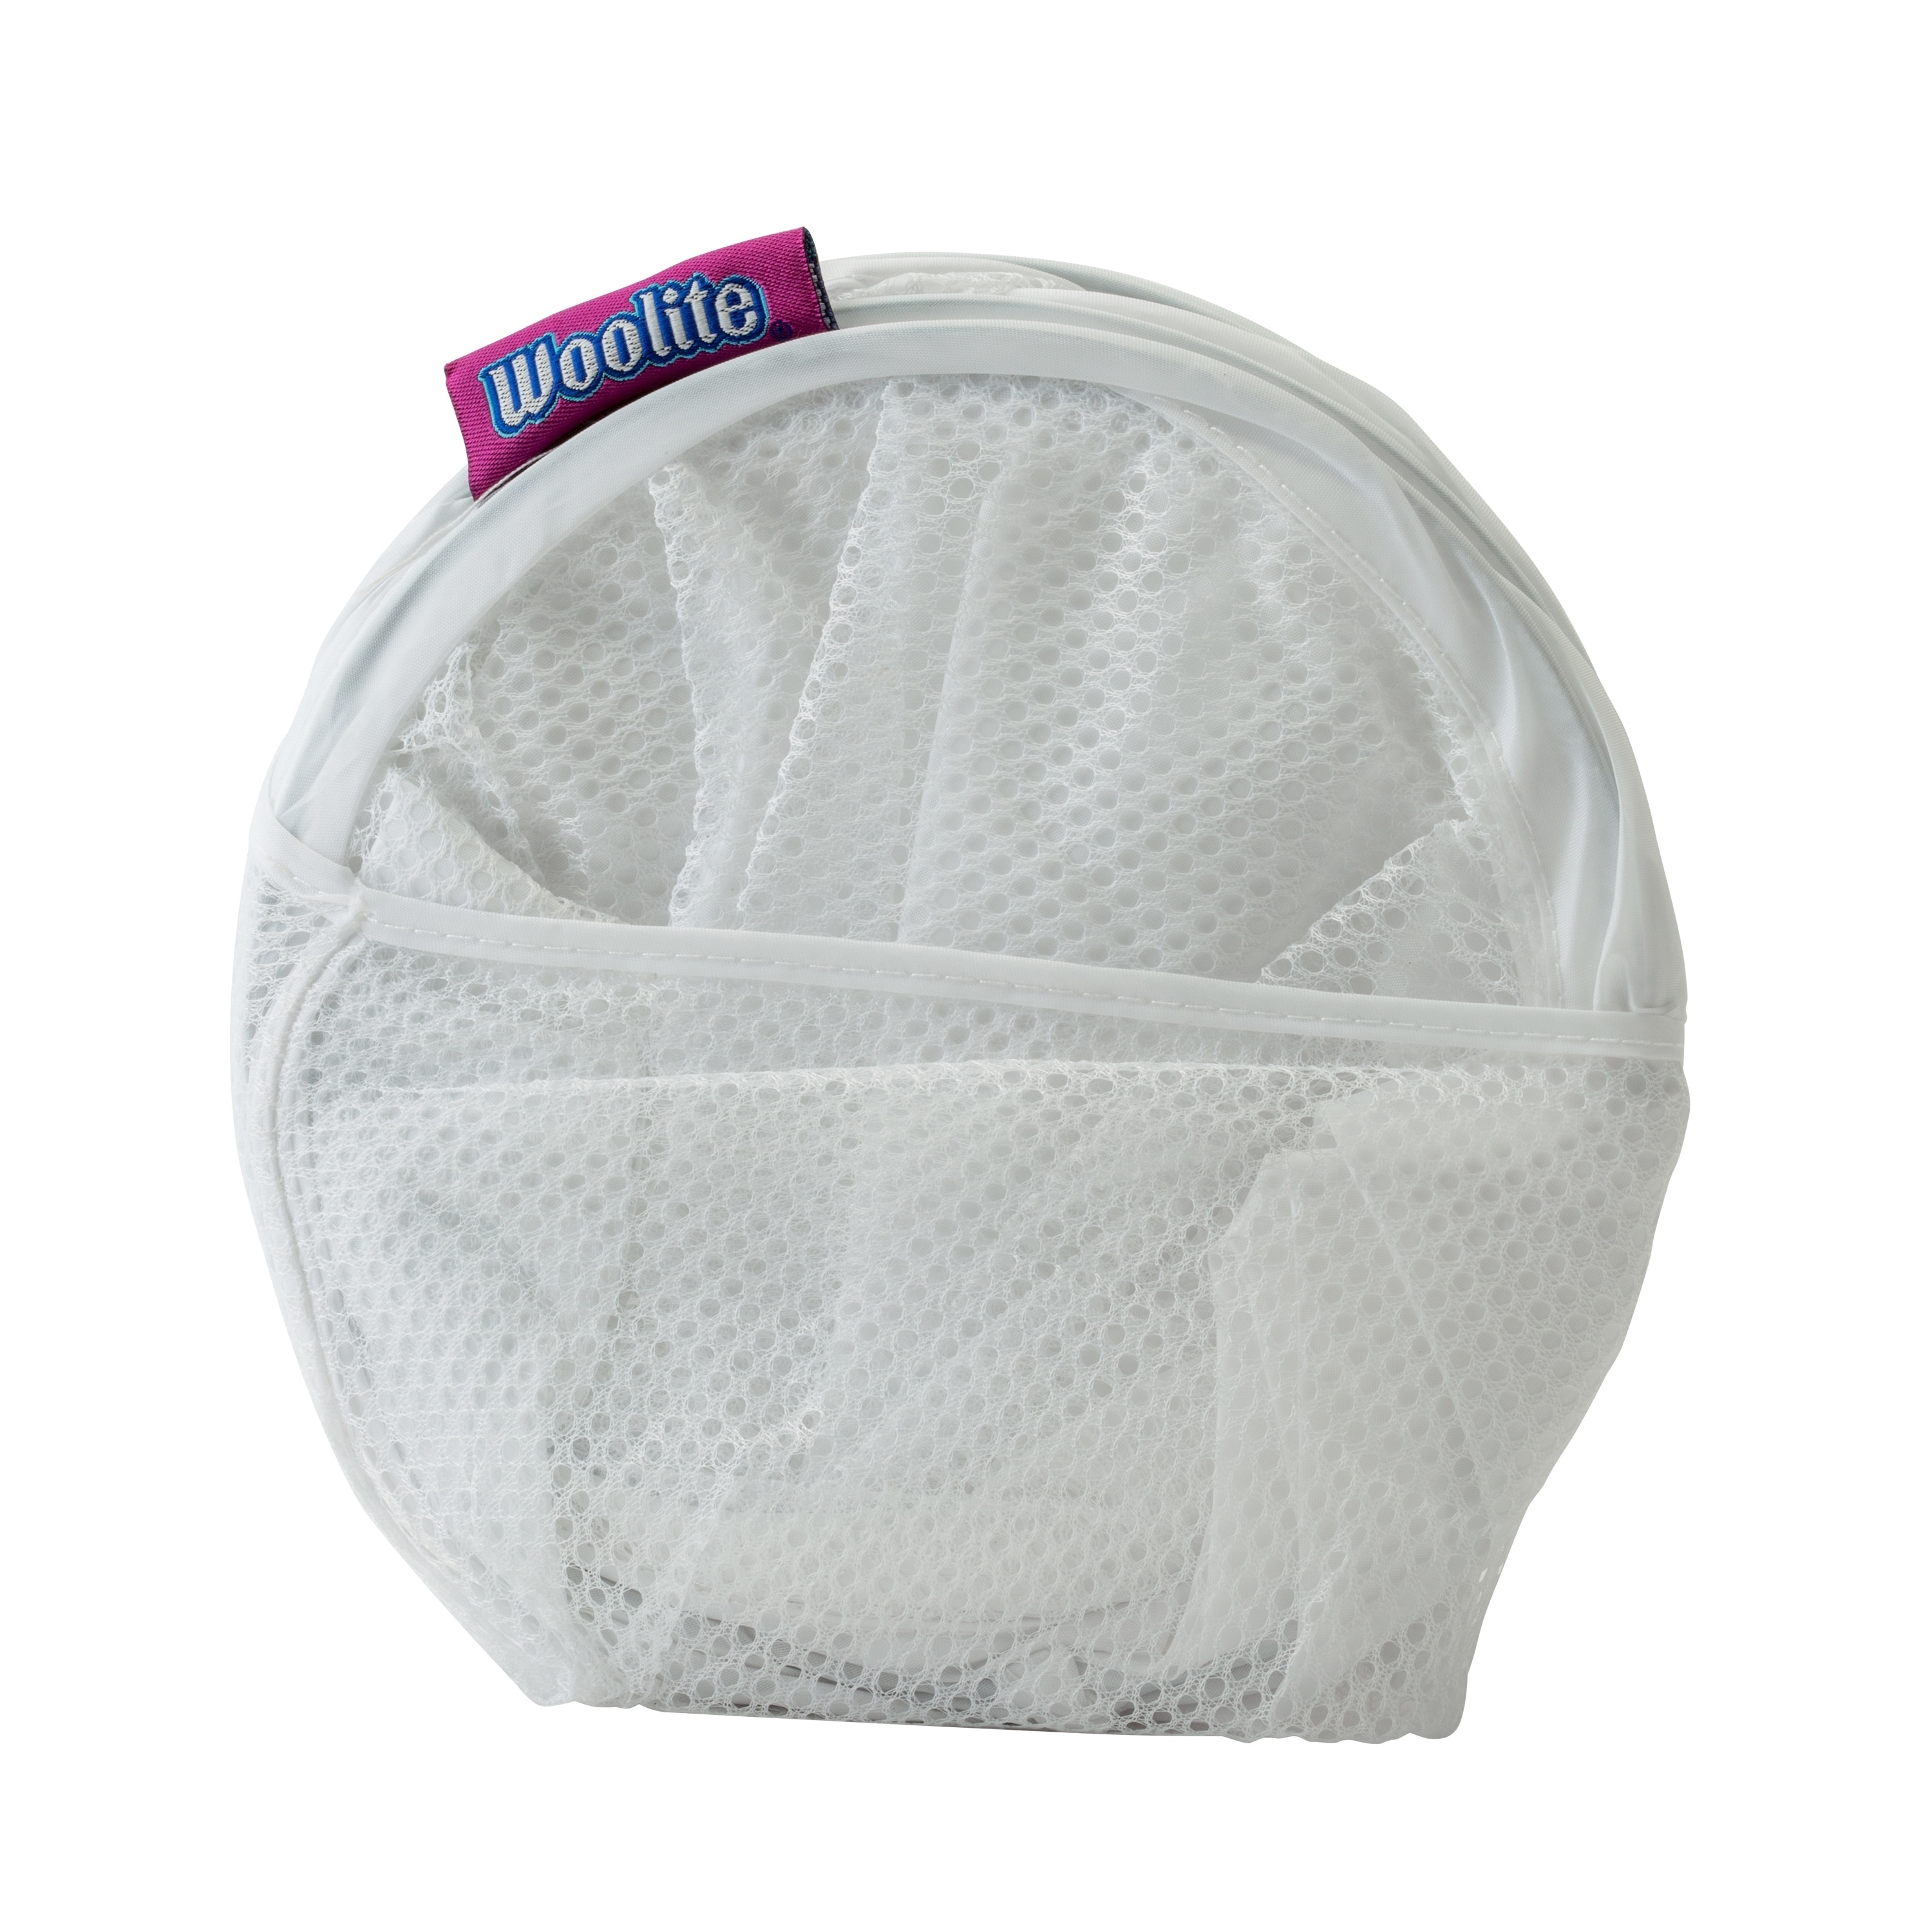 Mesh Laundry Hamper, Collapsible Laundry Baskets Bag, 1 Pcs - On Sale - Bed  Bath & Beyond - 38971819